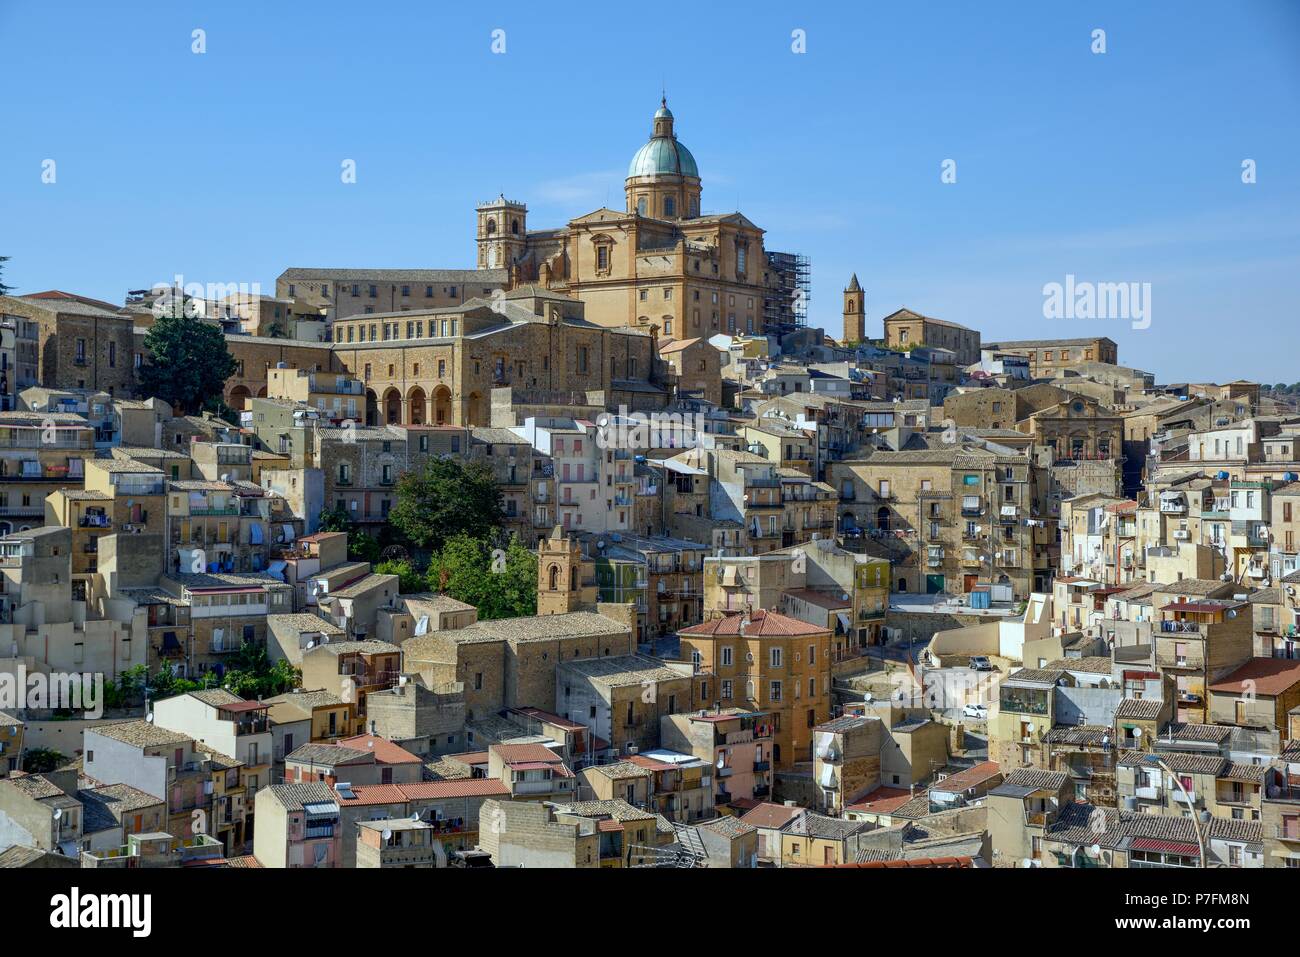 City view, Piazza Armerina, Province of Enna, Sicily, Italy Stock Photo